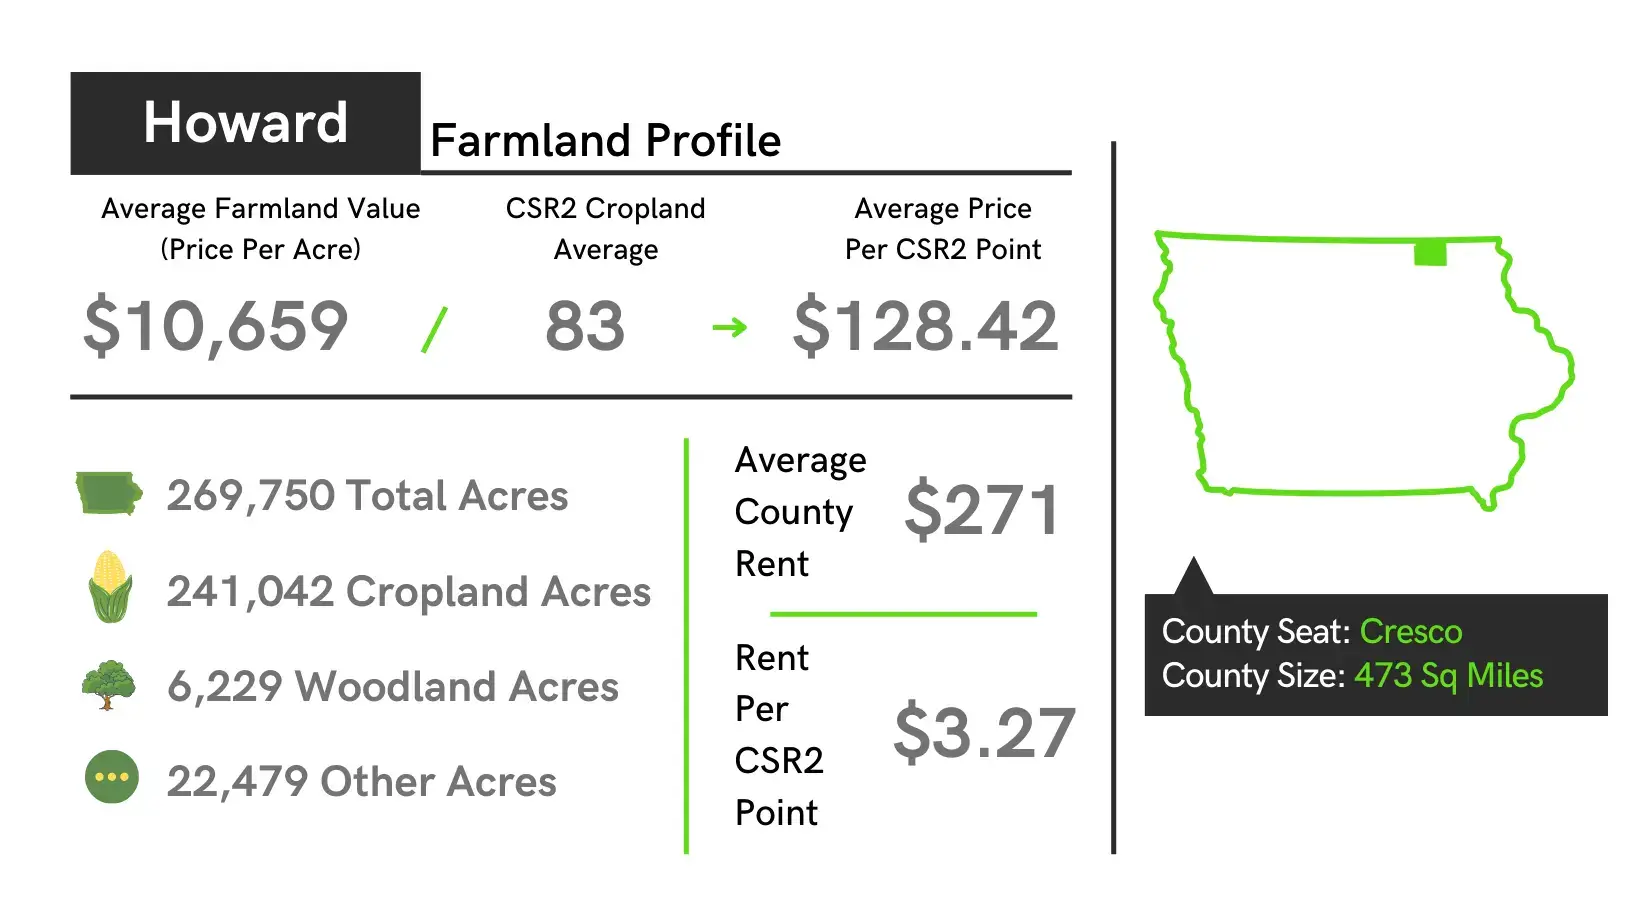 Howard County Farmland Profile